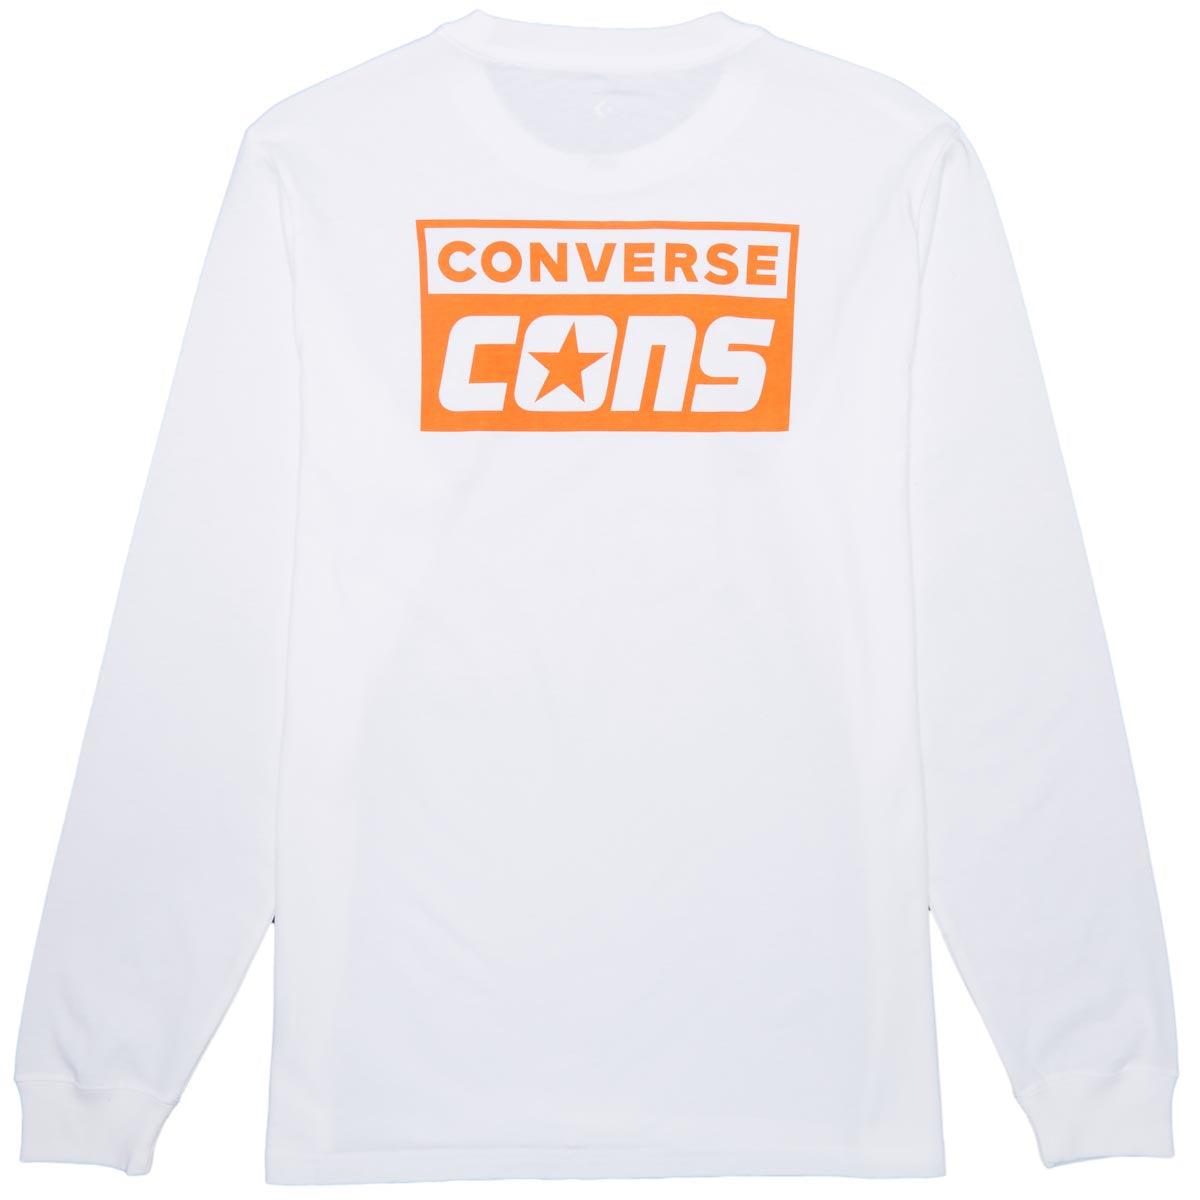 Converse Long Sleeve T-Shirt - White image 1